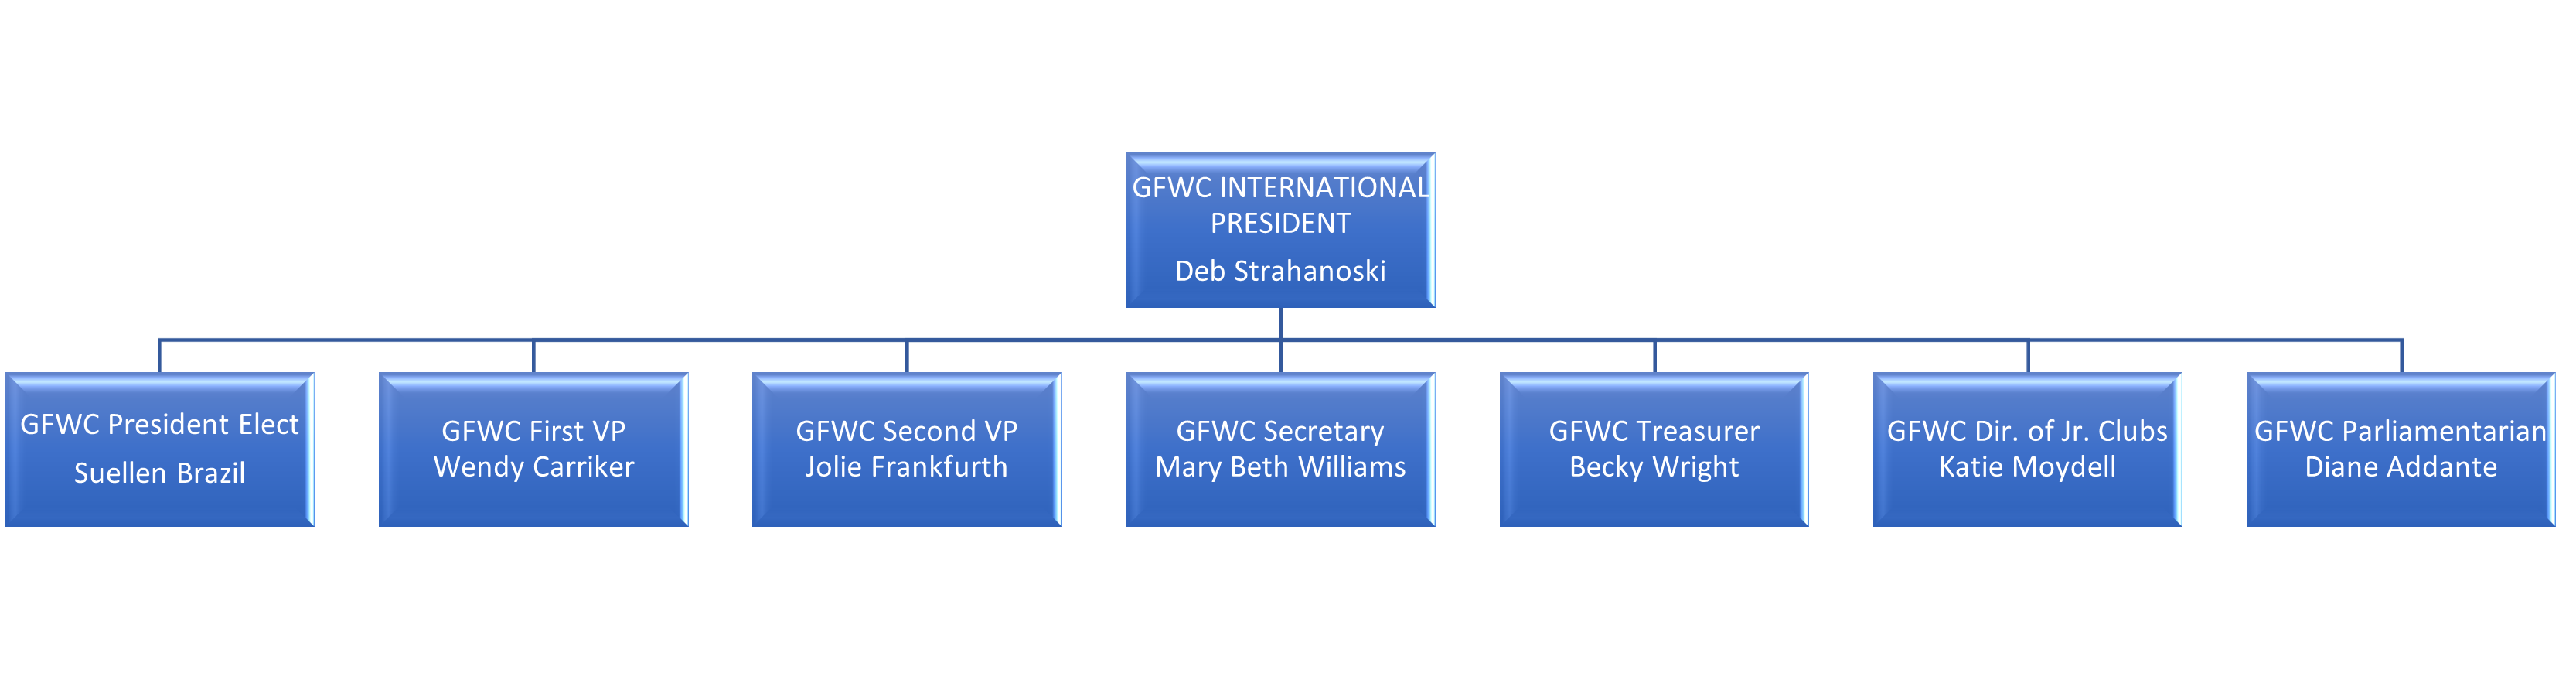 GFWC Organizational Structure